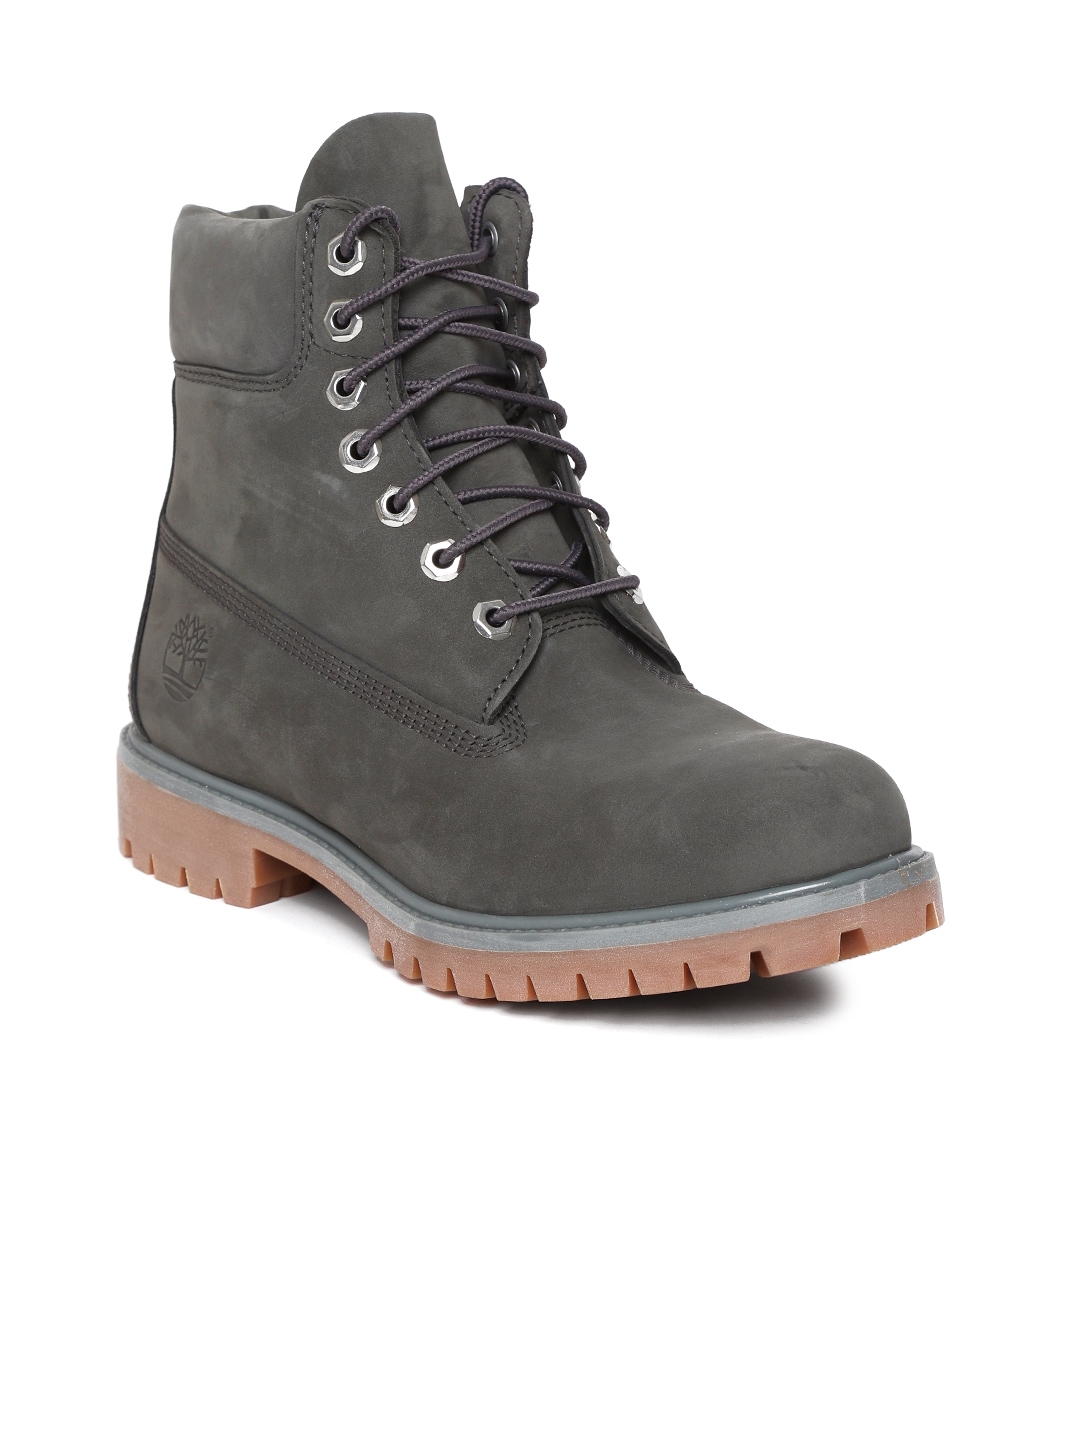 grey timberland boots mens